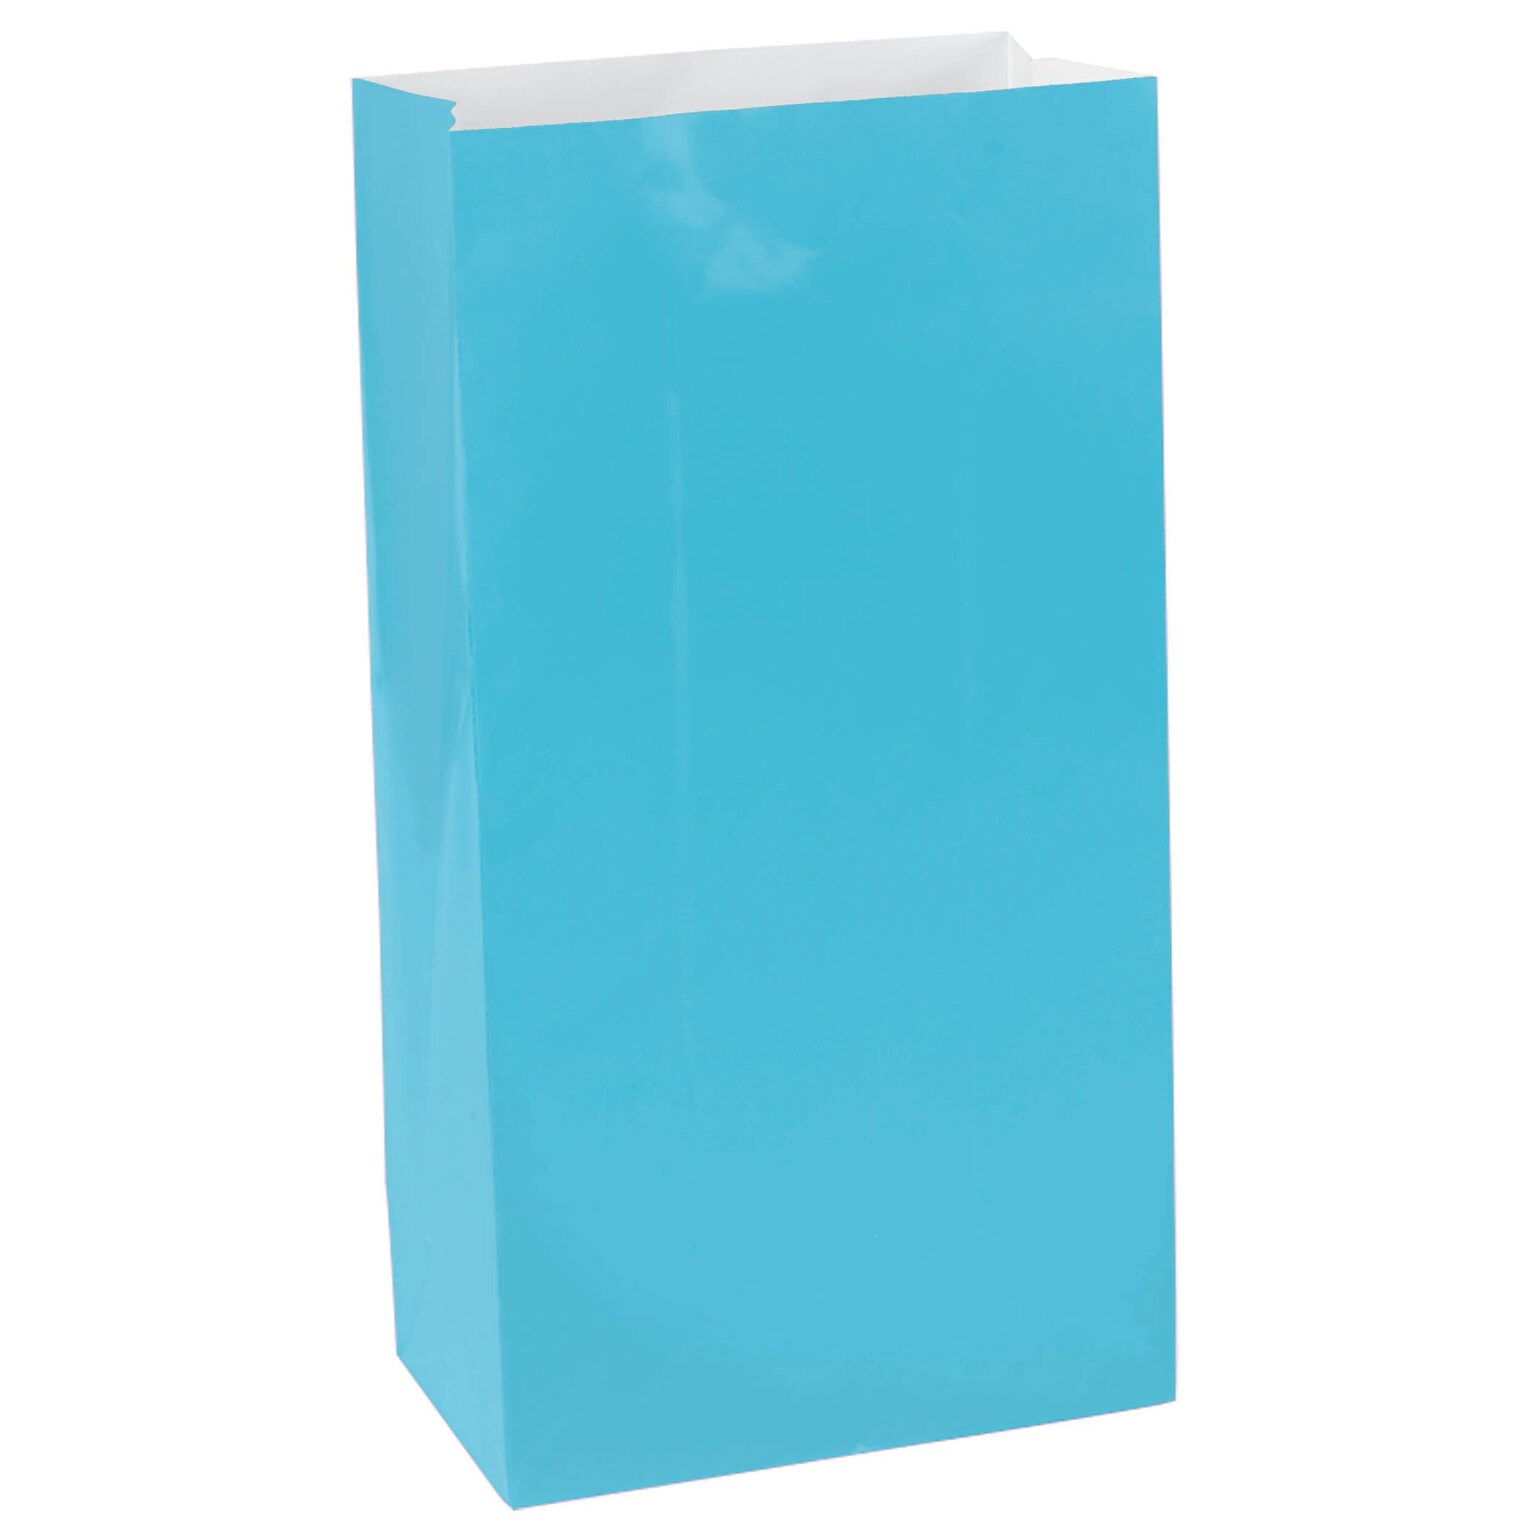 Amscan Paper Party Bag, 6.5 x 3, Caribbean Blue, 9/Pack, 12 Bags/Pack (370202.54)